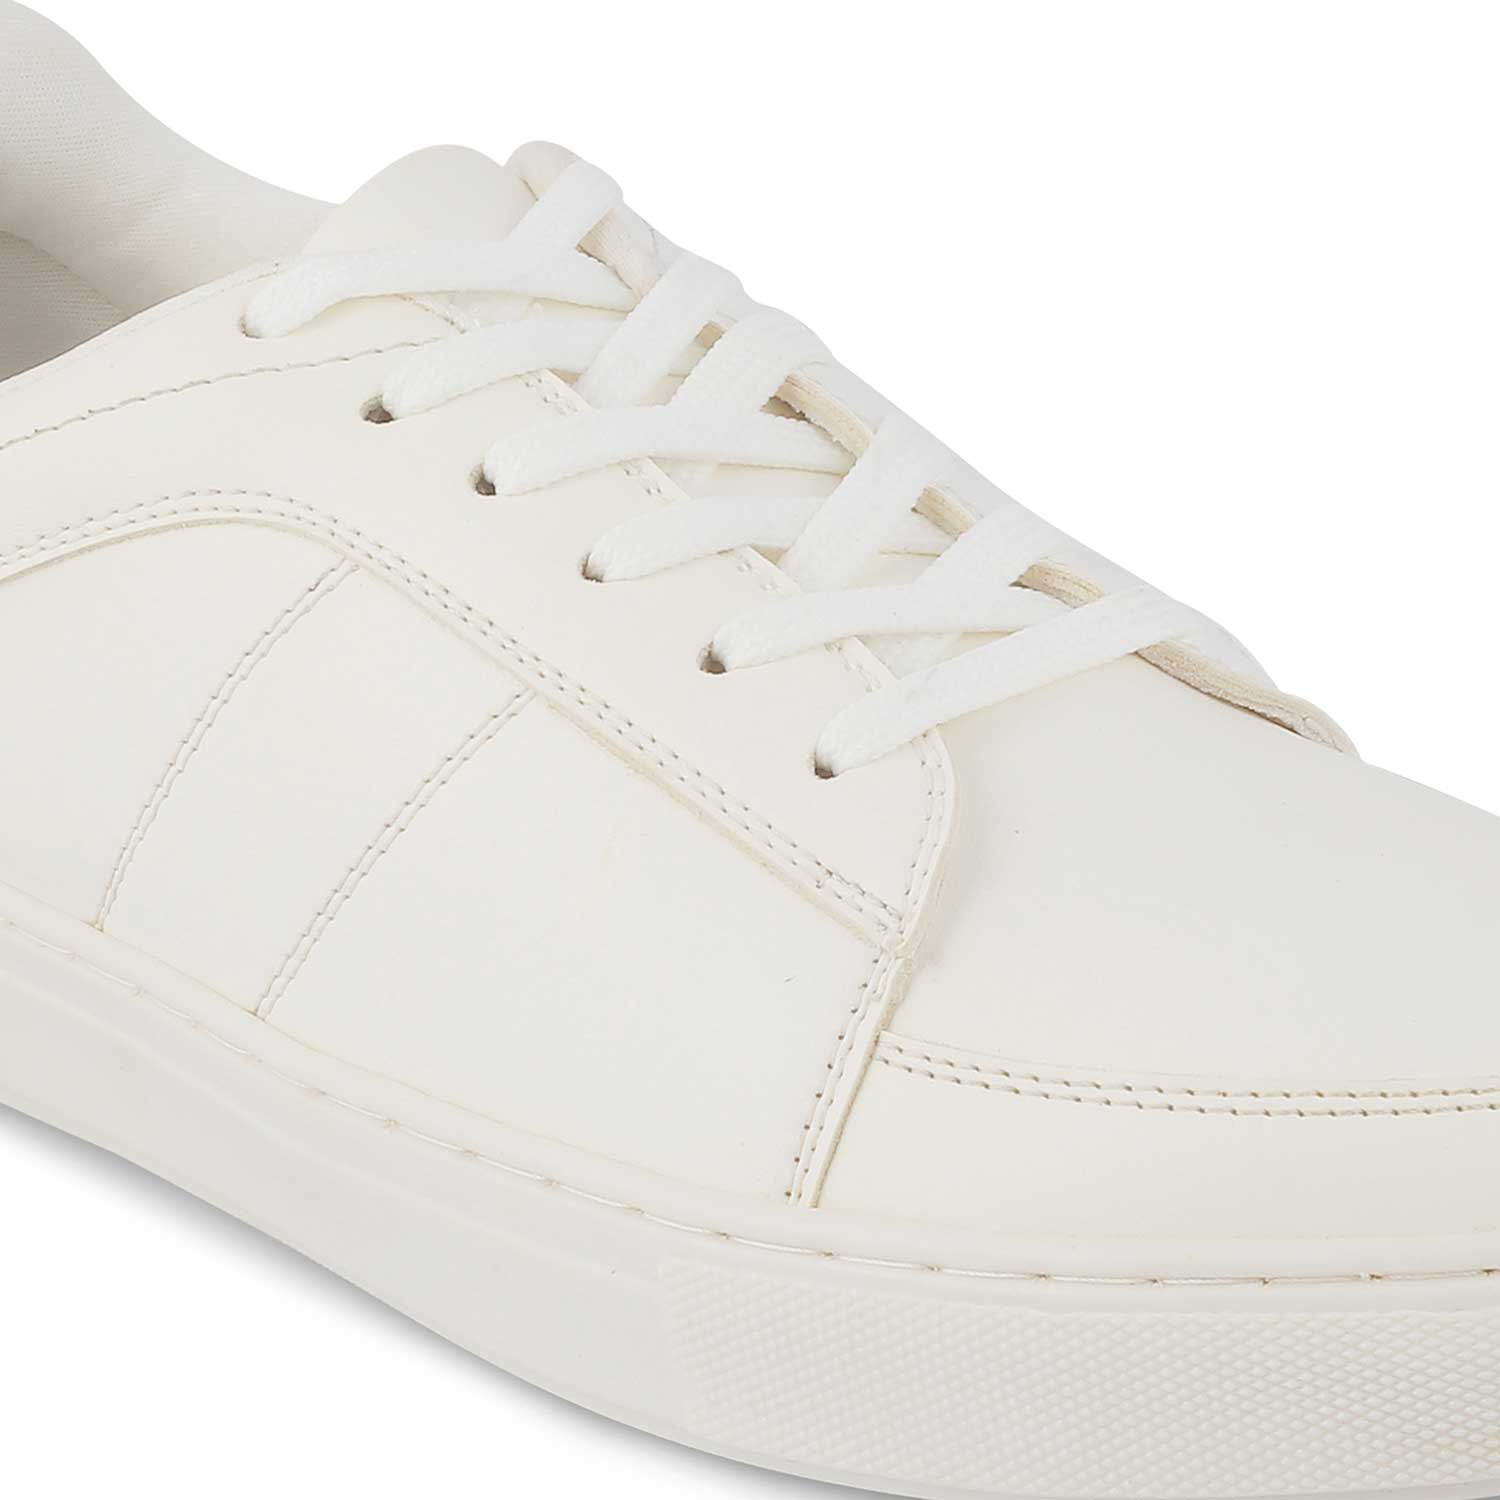 Tresmode-The Gofti White Men's Sneakers Tresmode-Tresmode